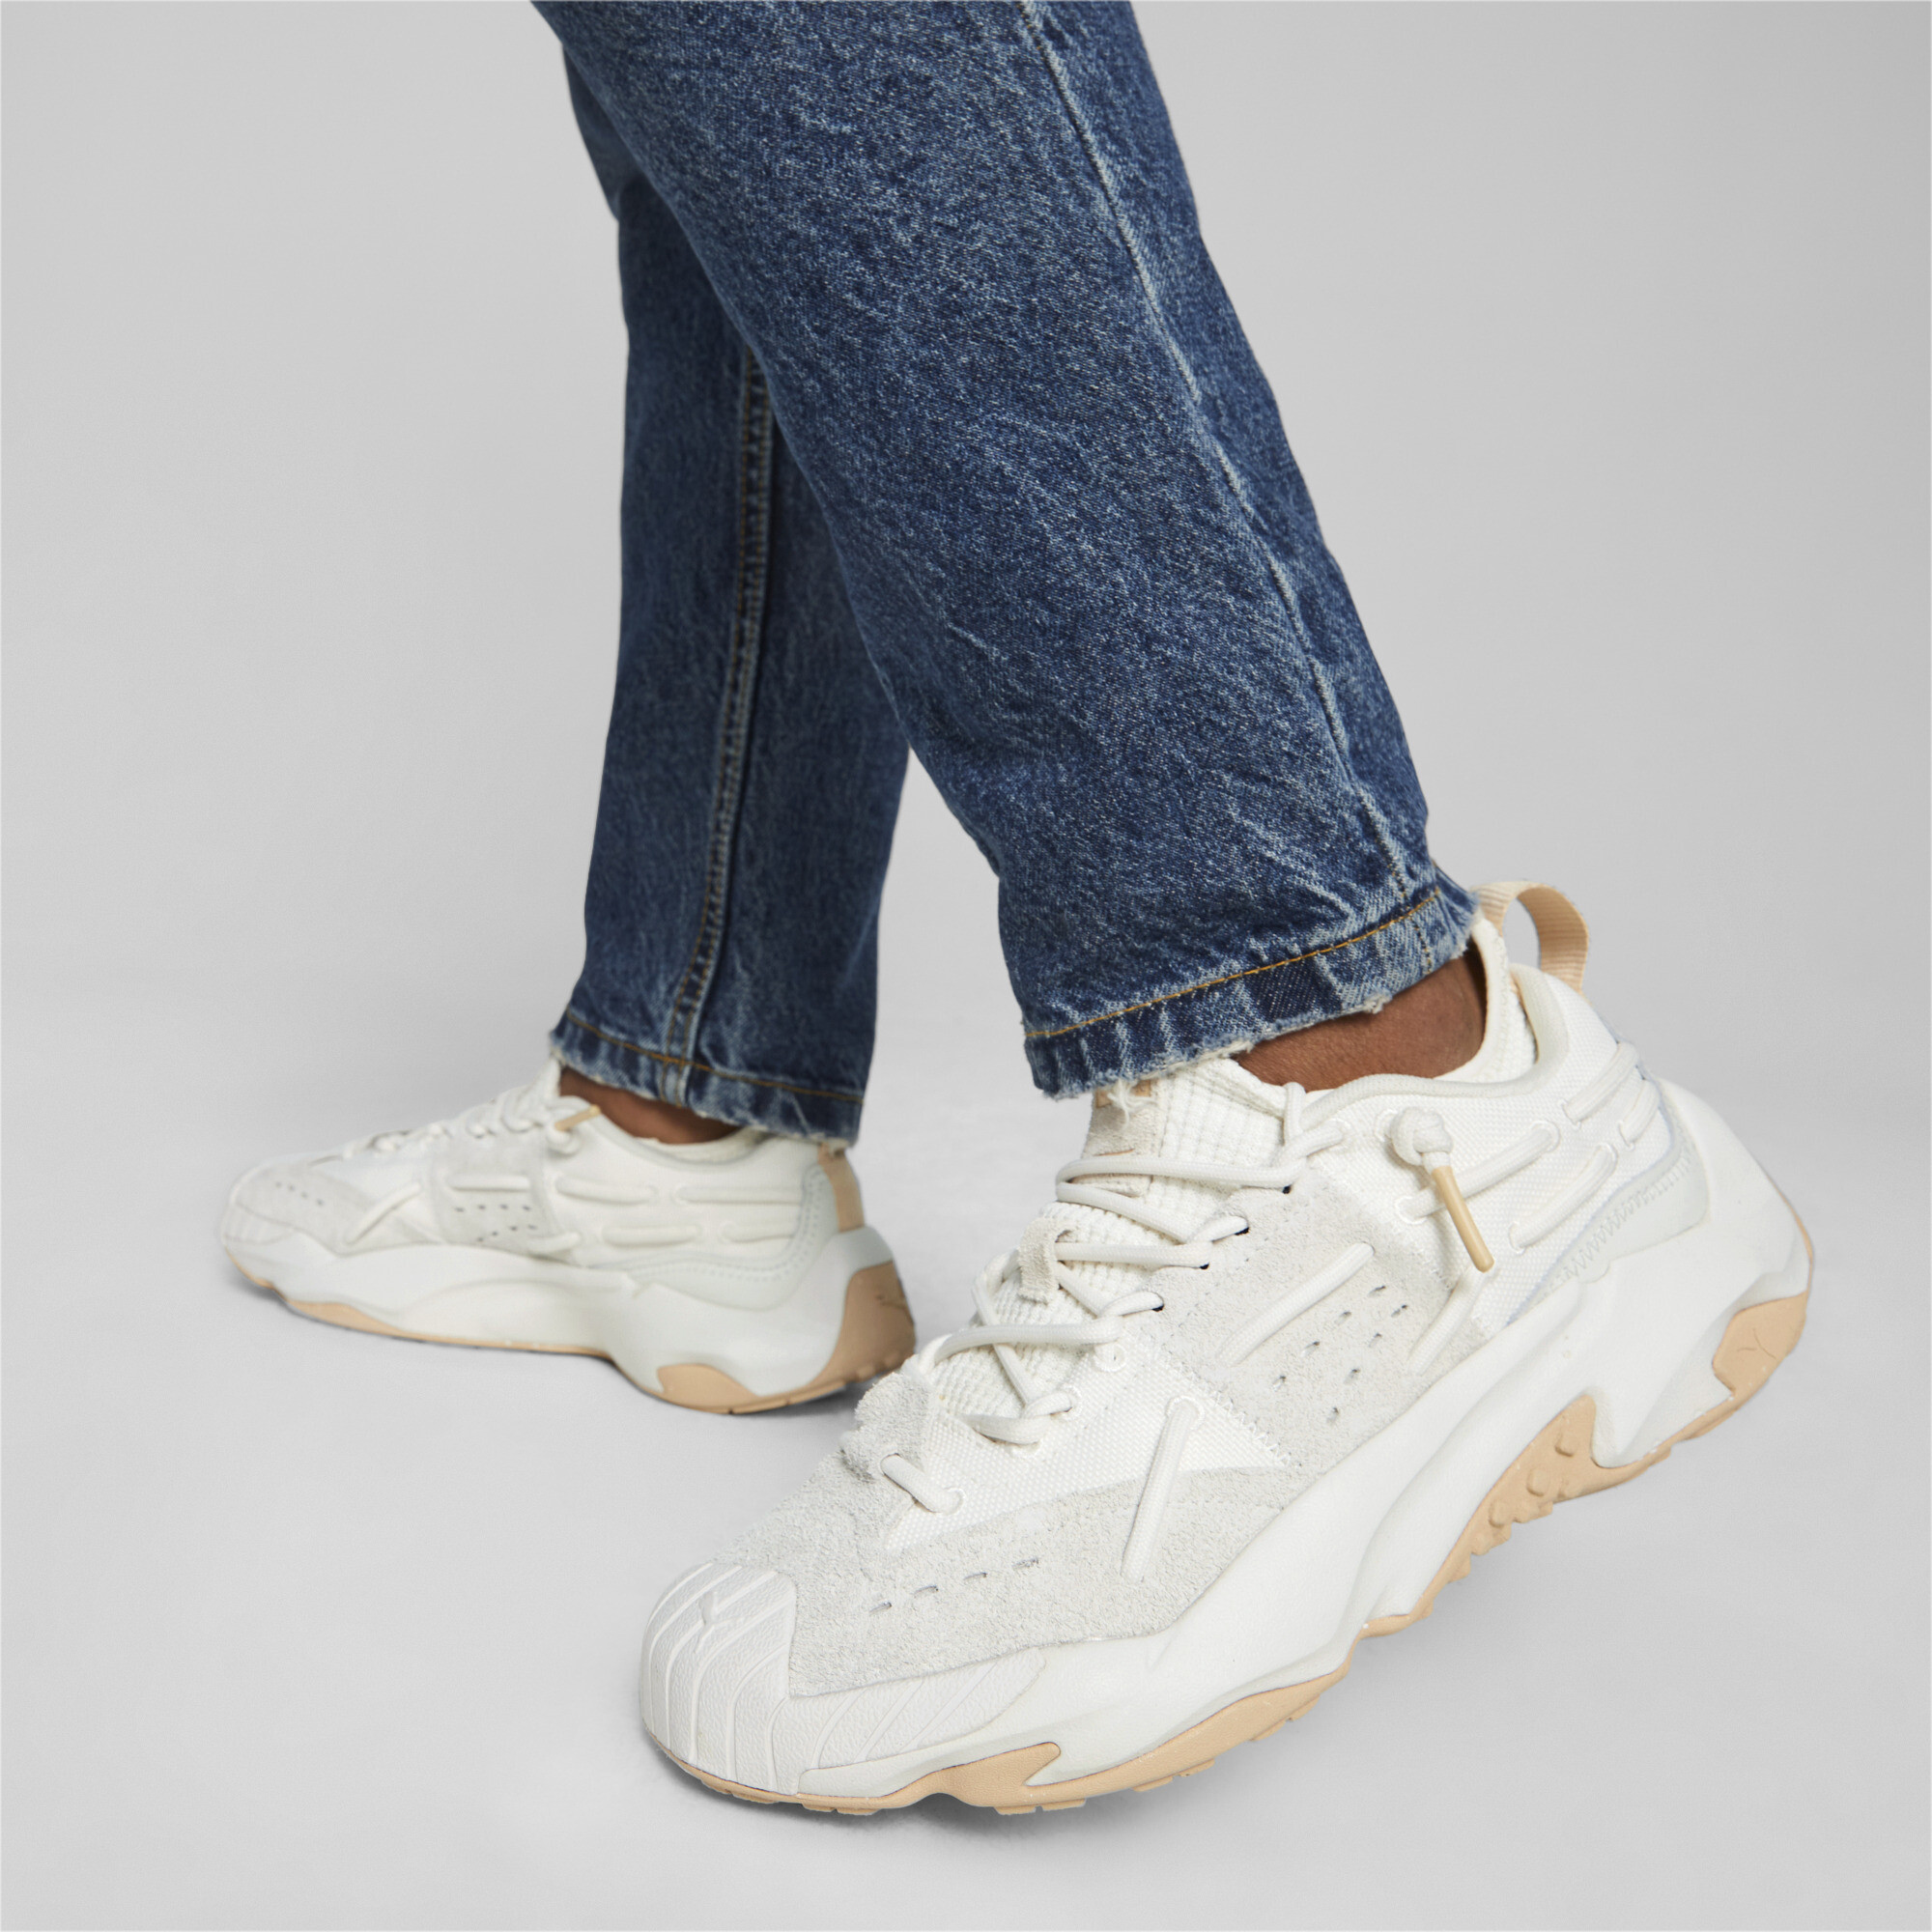 Puma Plexus Sand Sneakers, White, Size 48, Shoes